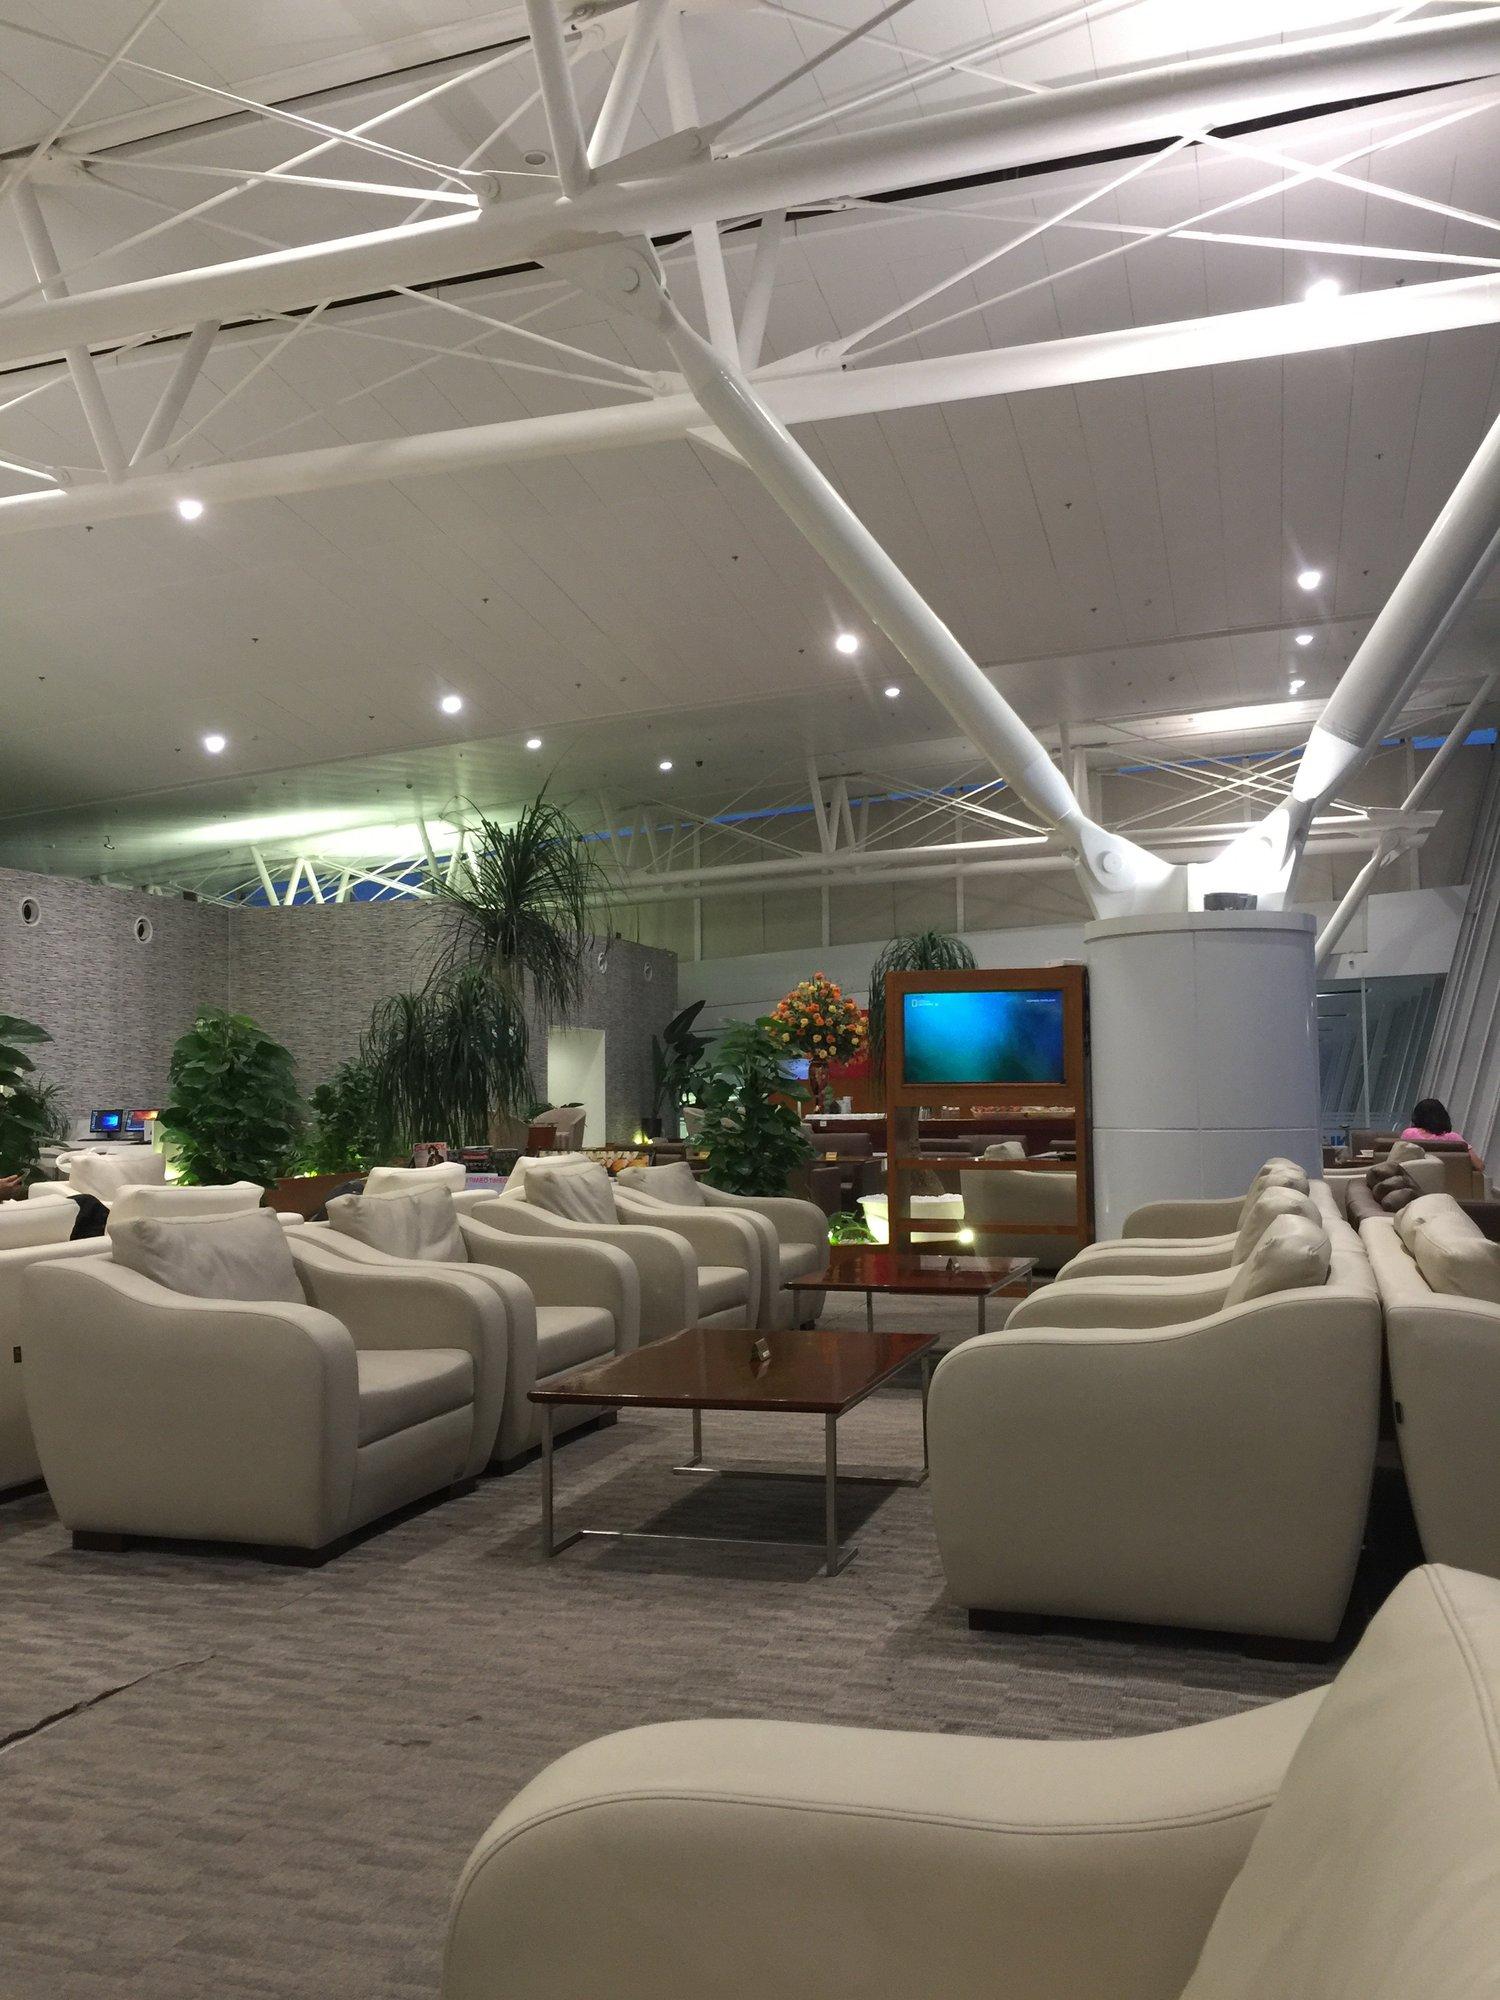 Noi Bai International Airport Business Lounge image 14 of 26